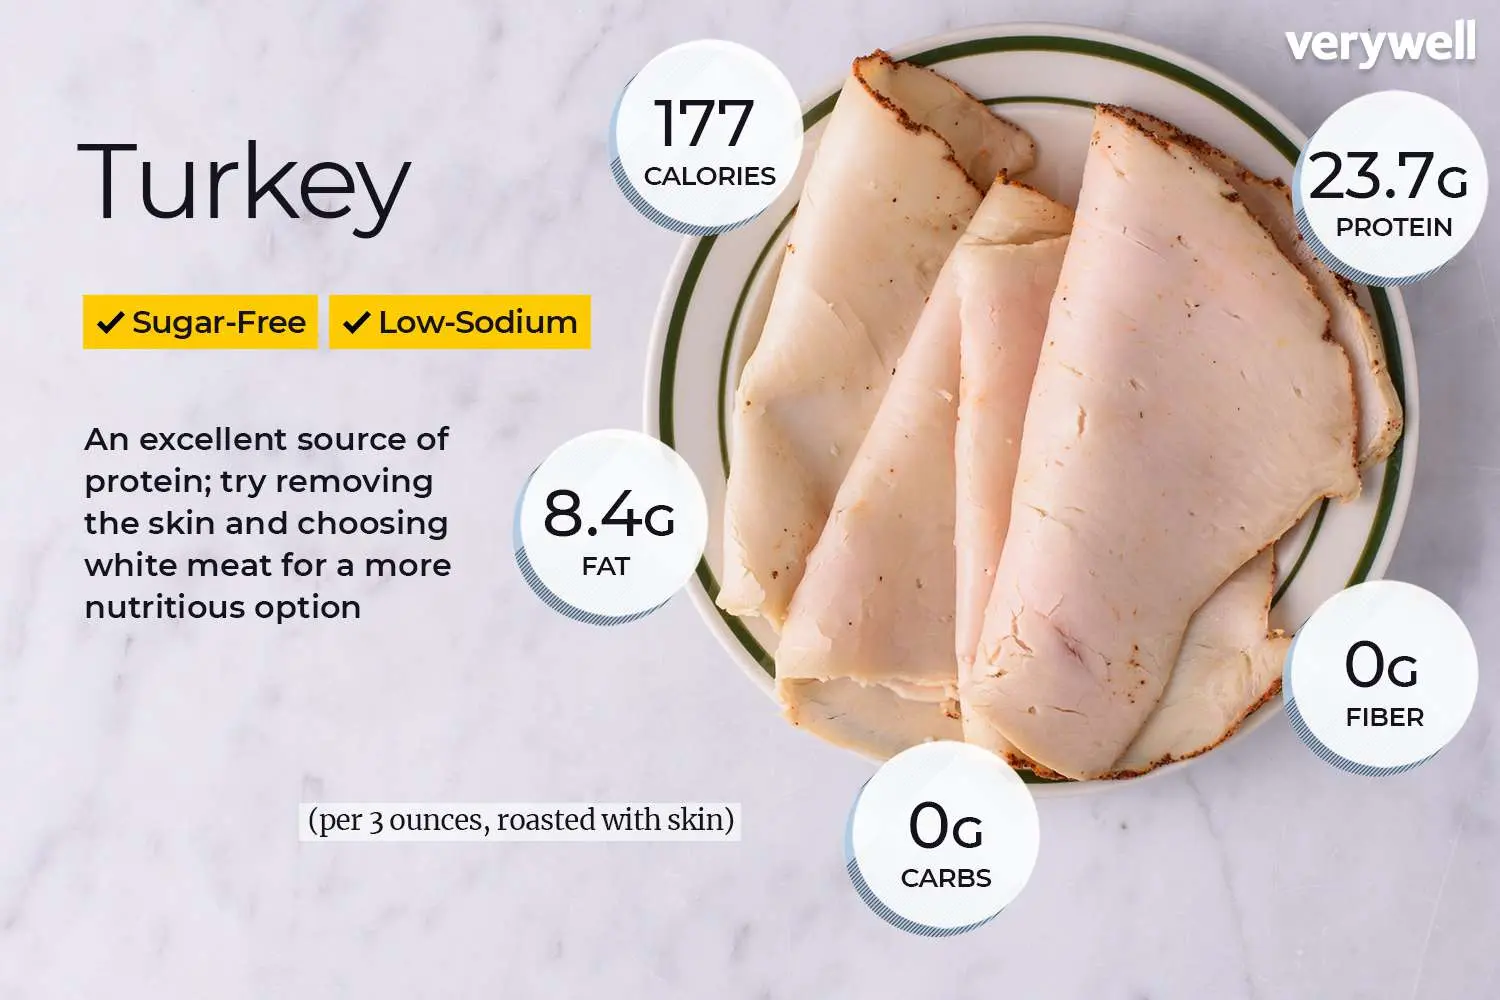 how many calories in smoked turkey - How many calories are in a deli smoked turkey